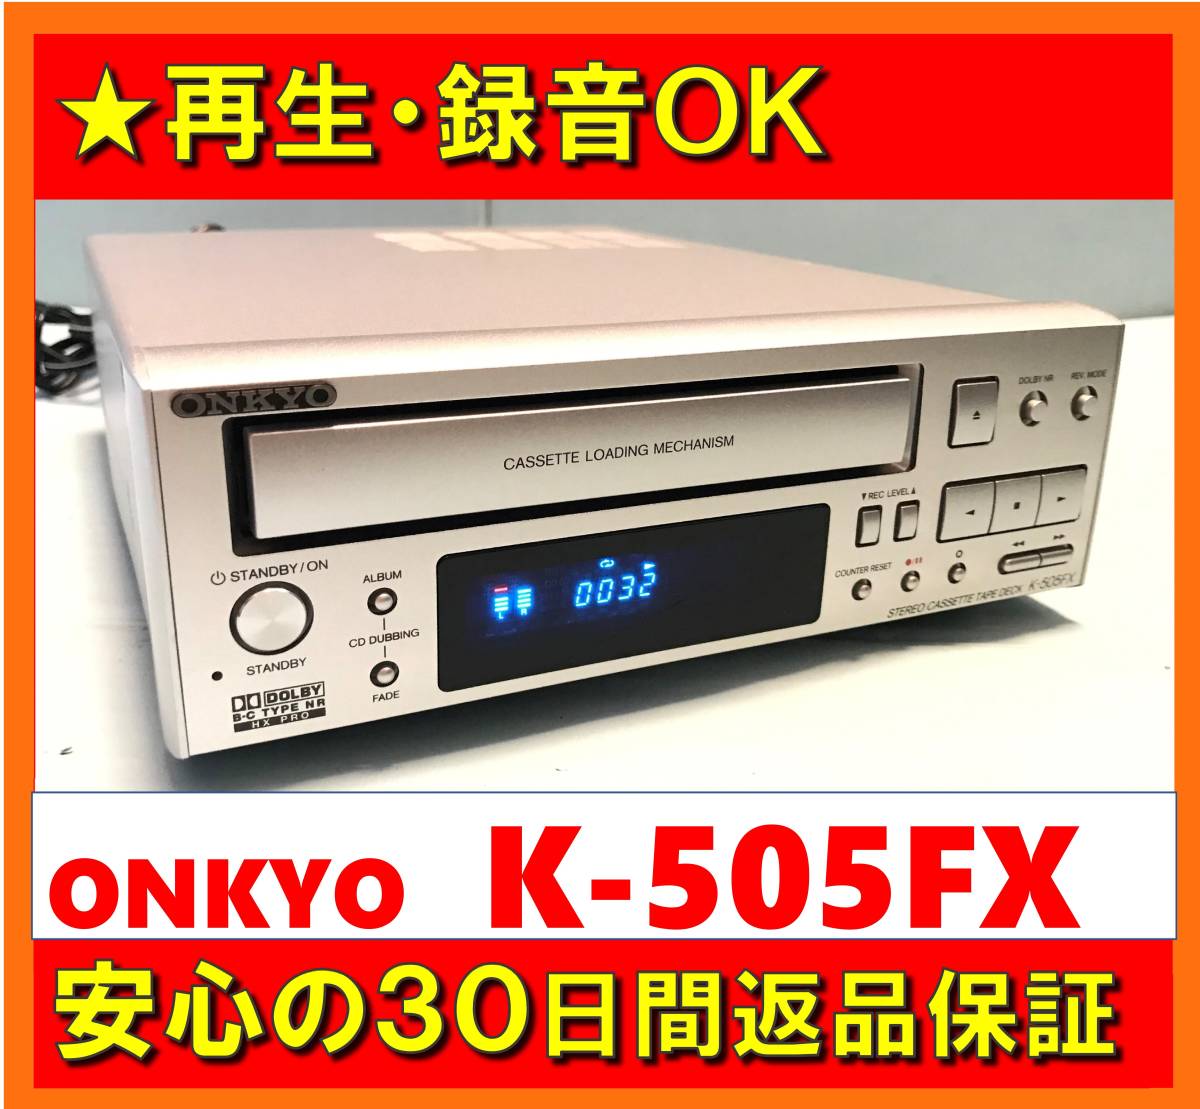 ONKYO K-505FX ステレオカセットテープデッキ S/N: A950122485 取扱 